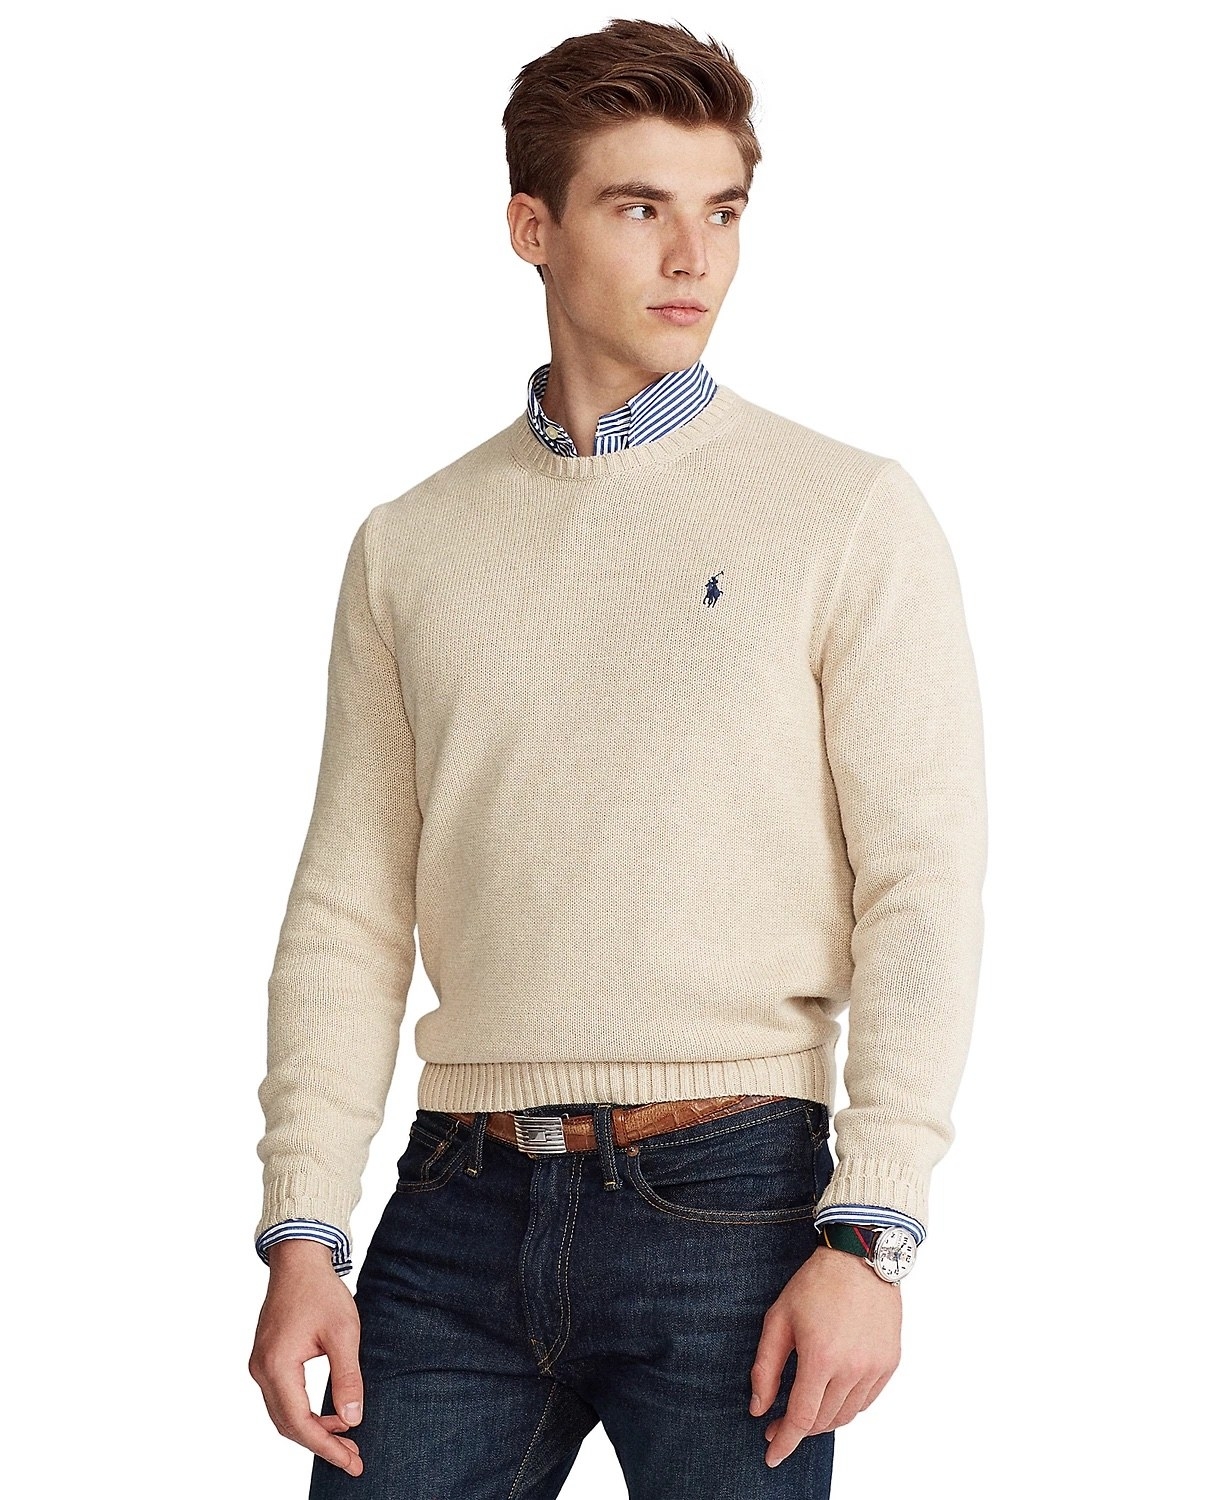 model wearing crewneck sweater